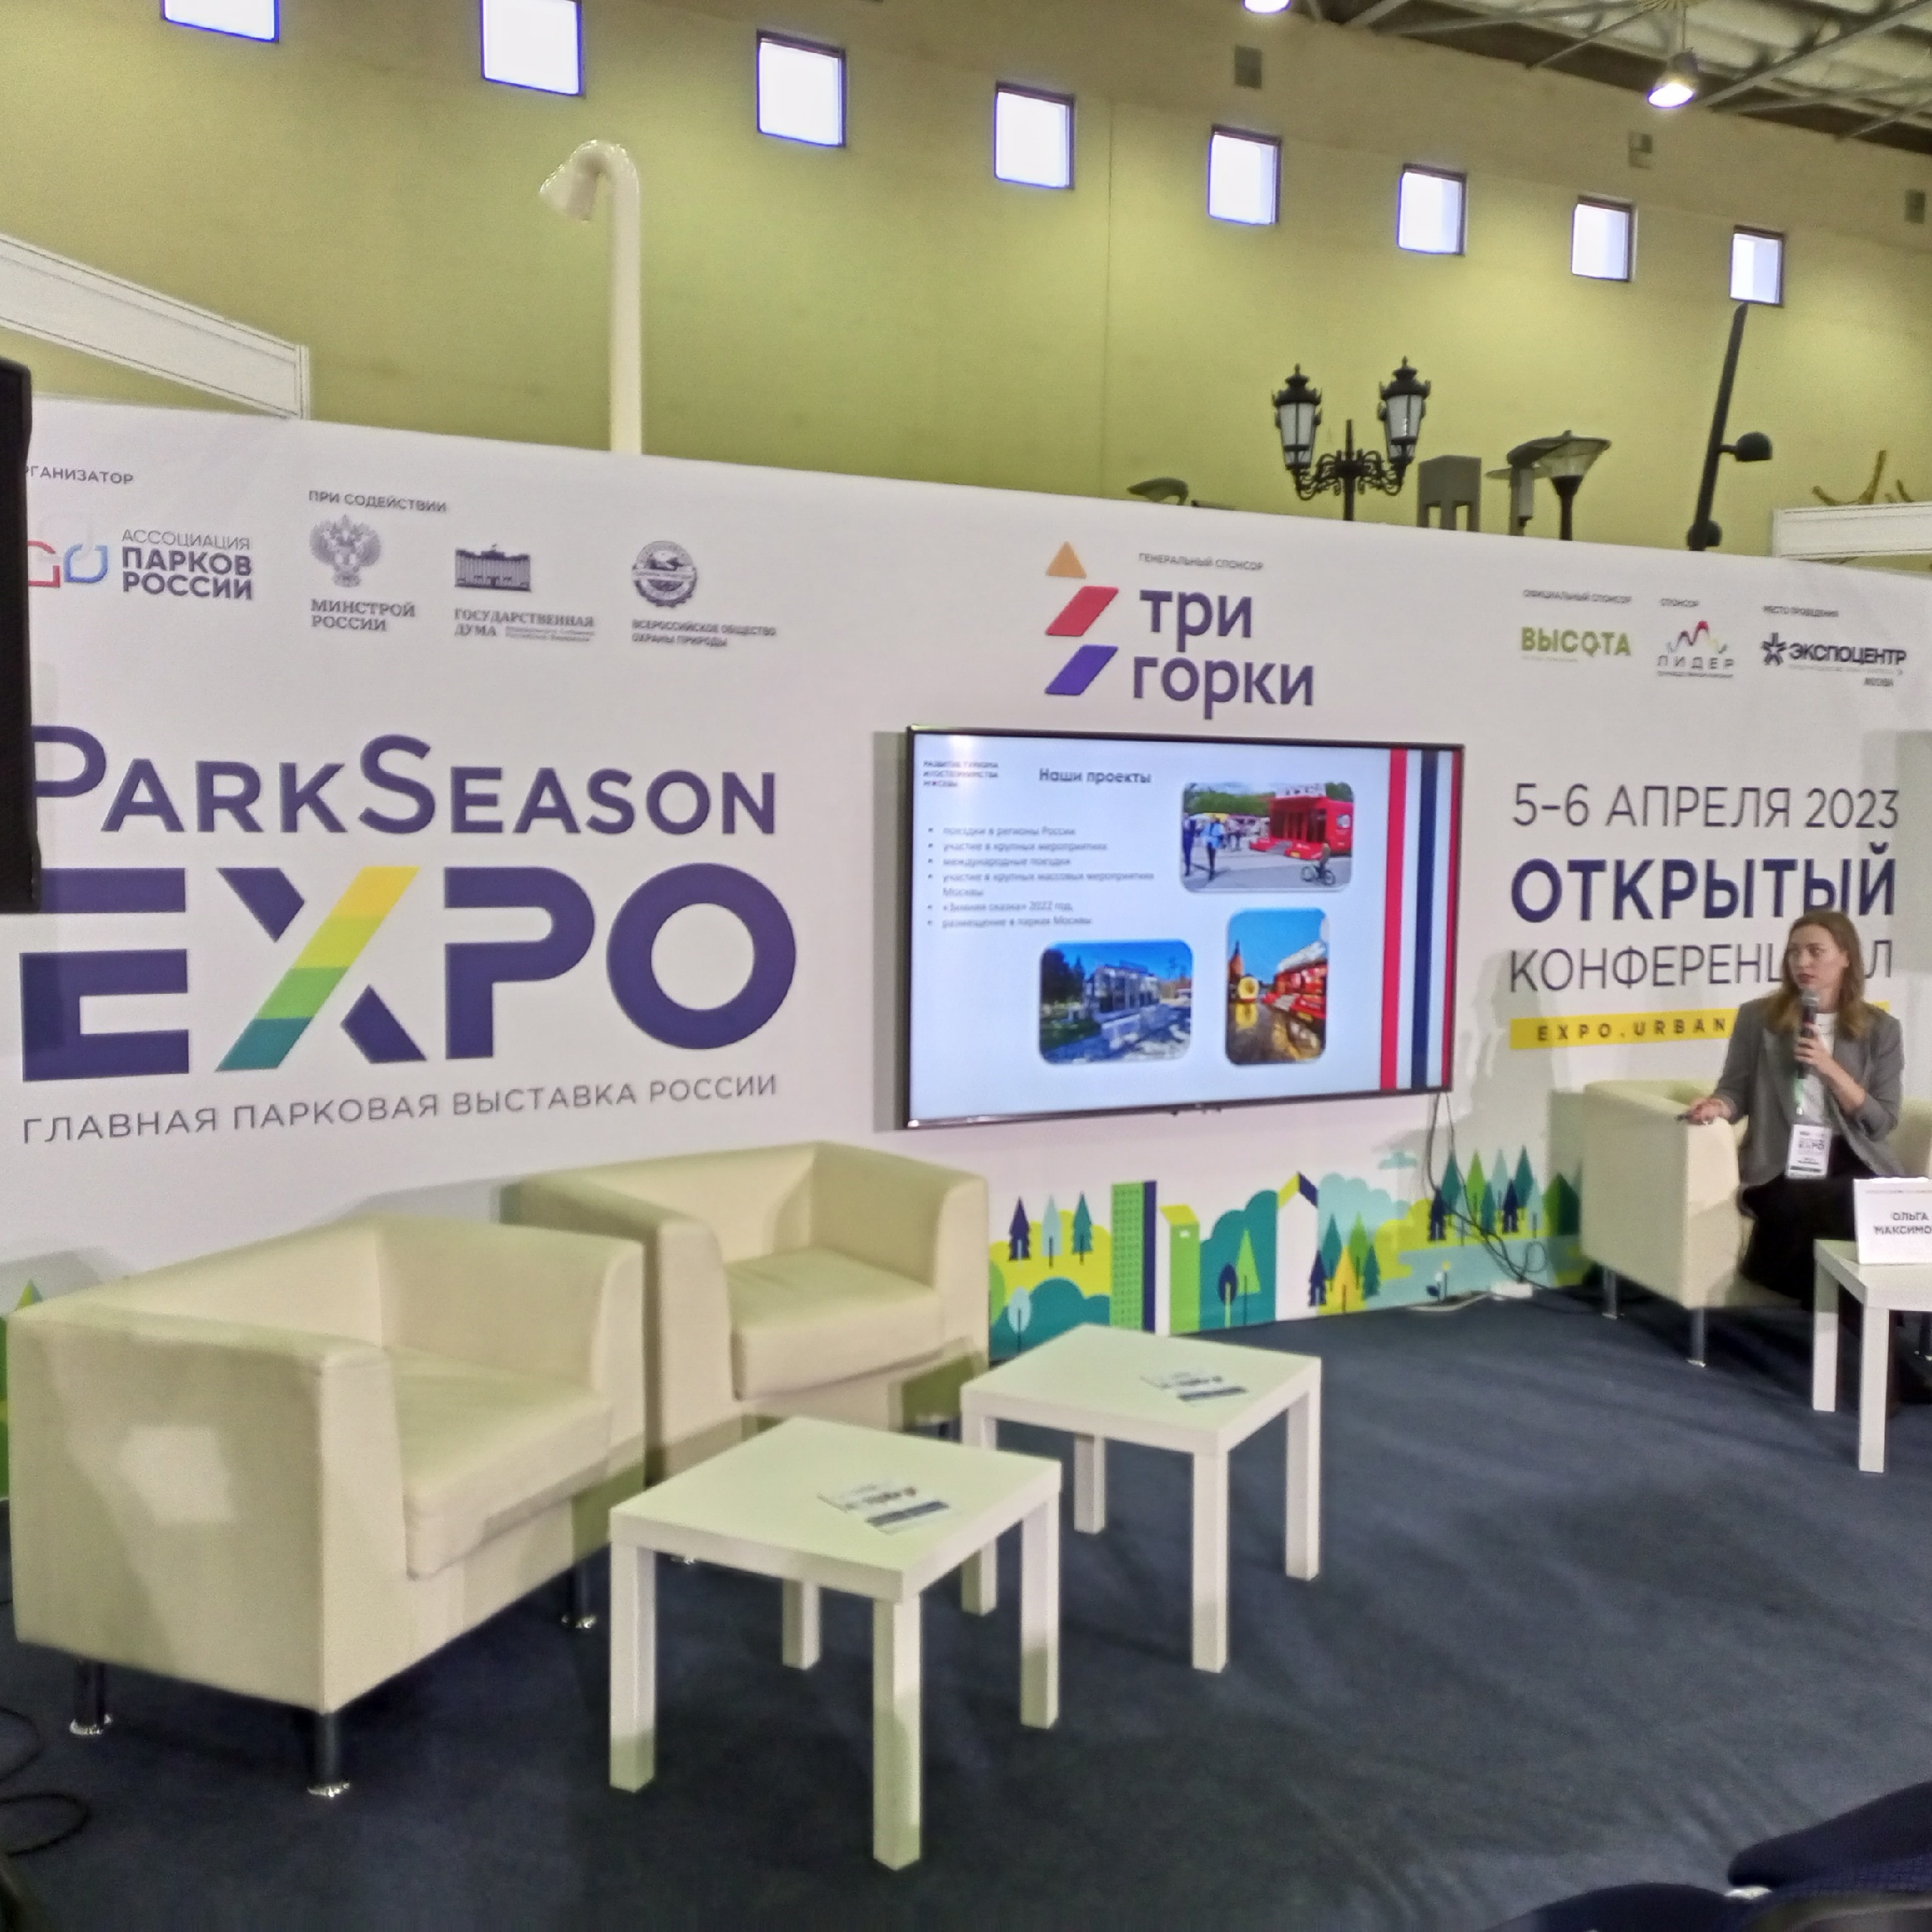 ParkSeason Expo